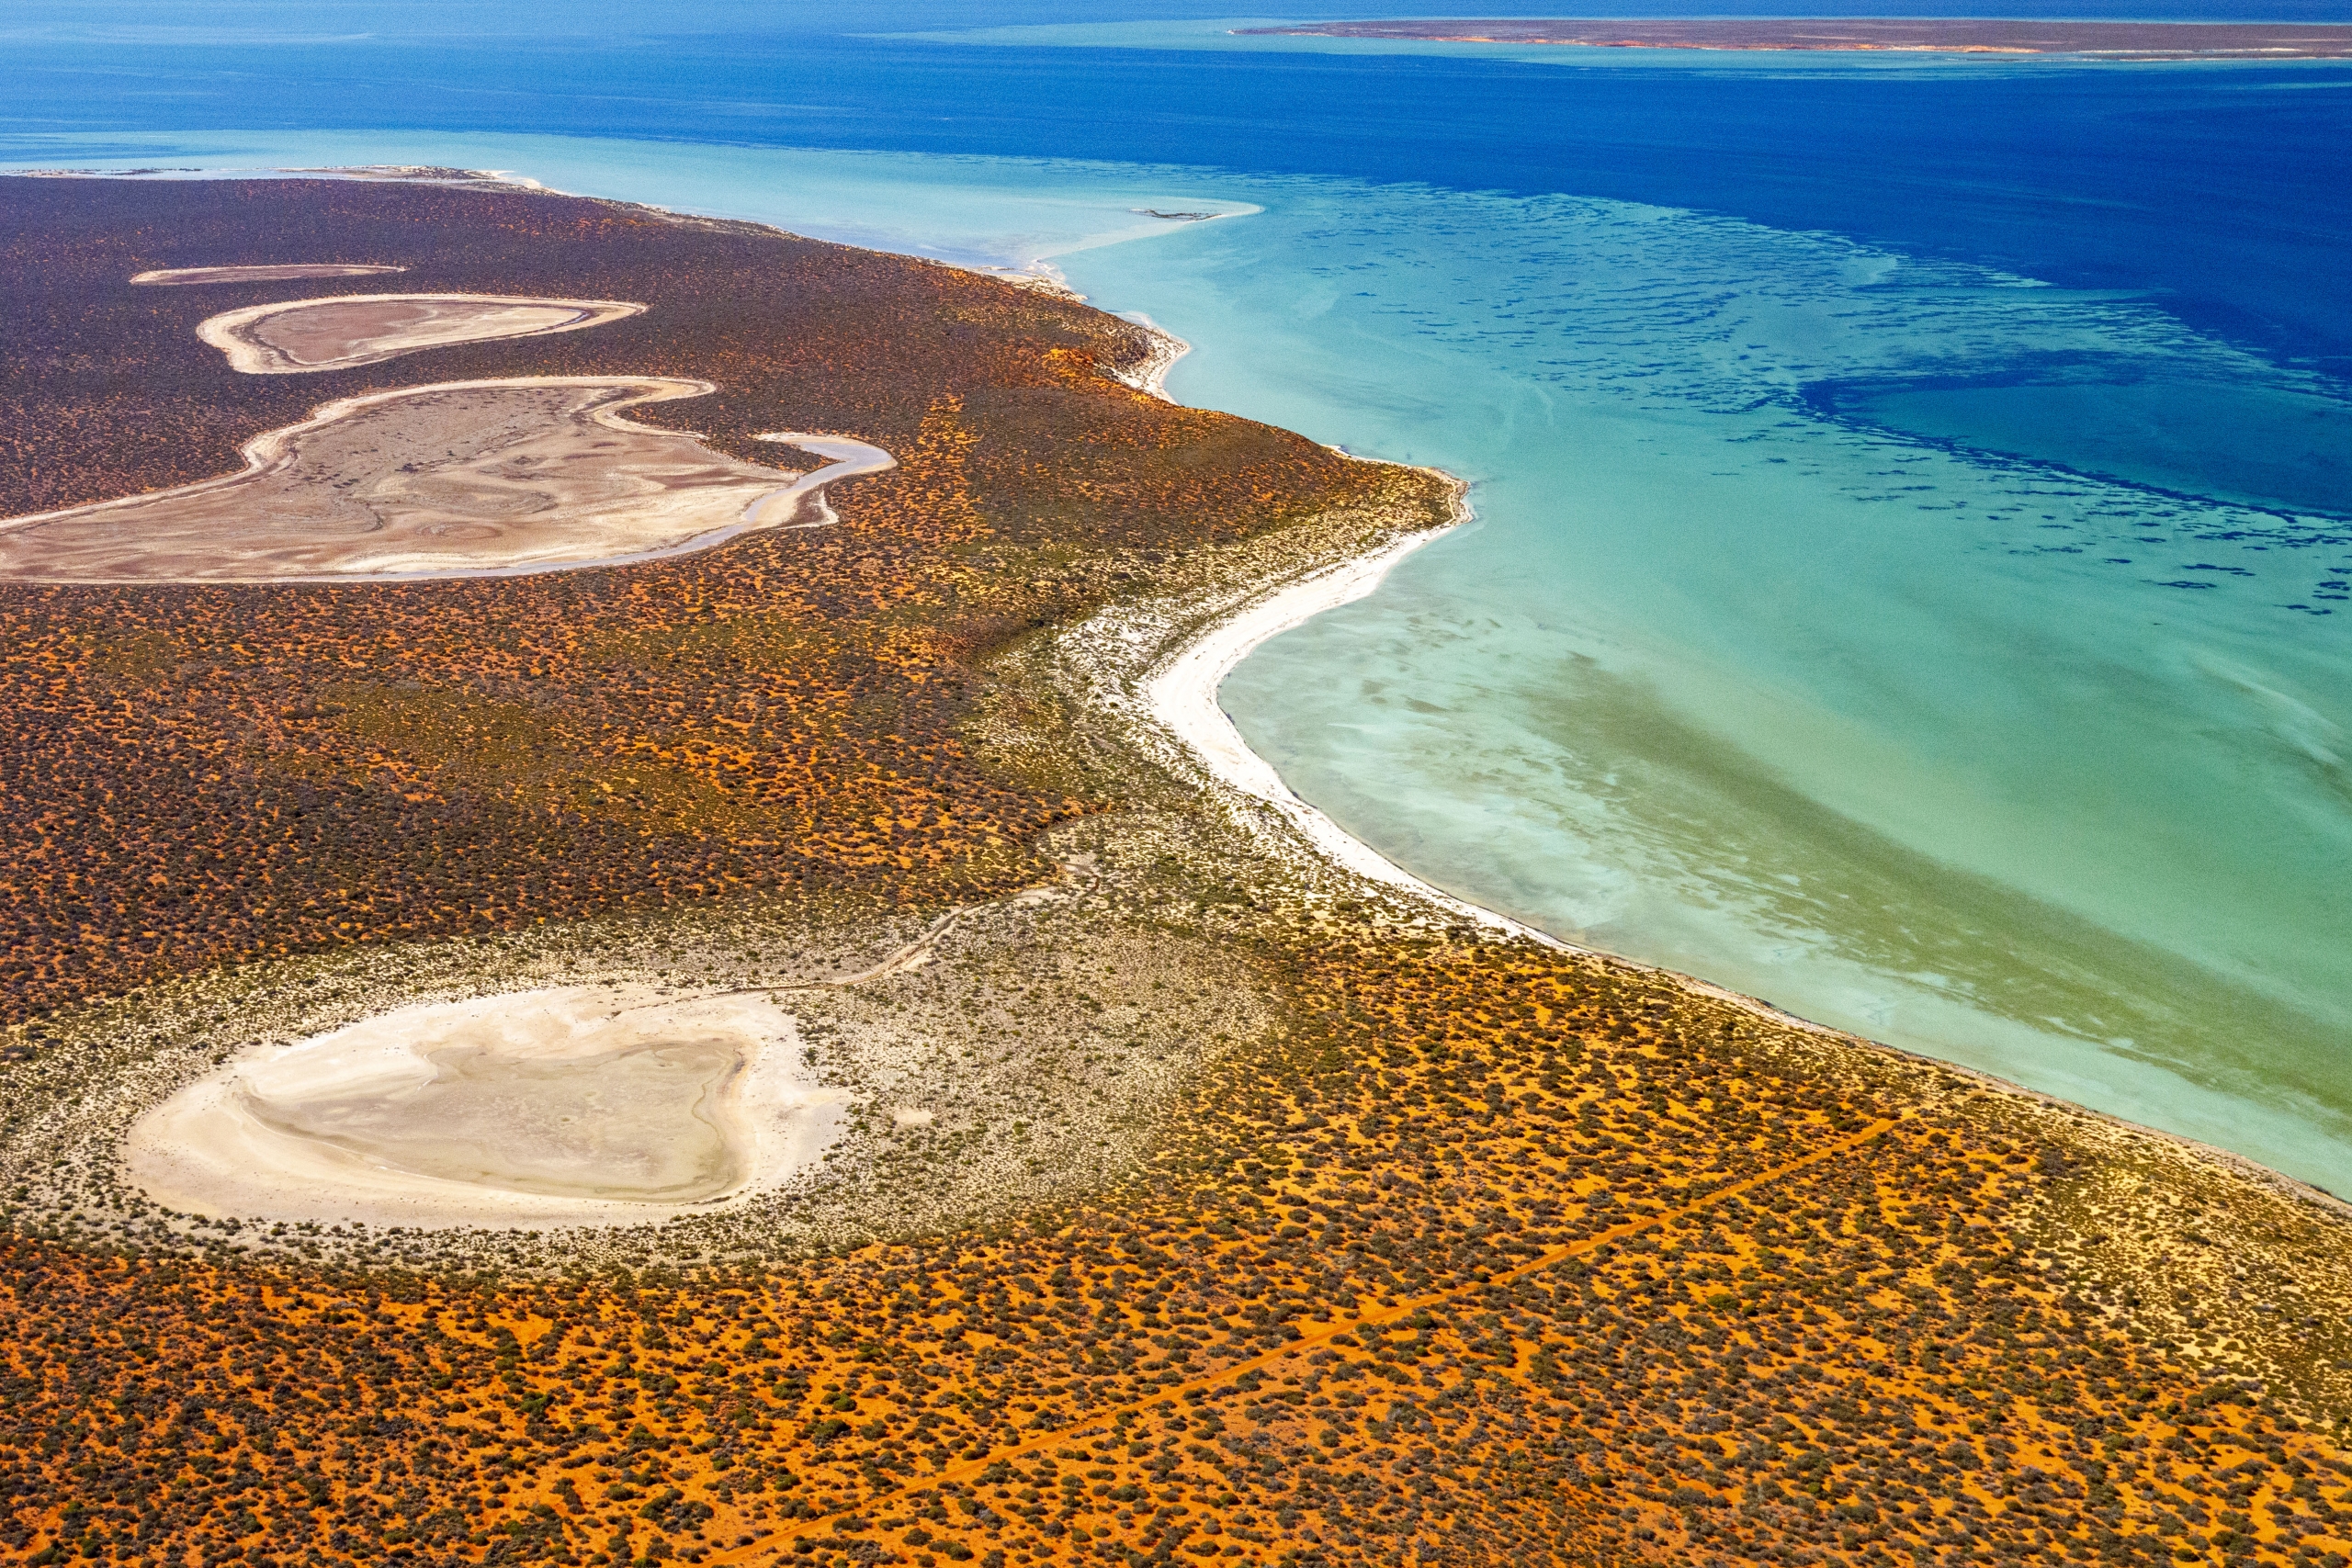 Aerial photo of Shark Bay showing land and sea (Photo credit: Nick Thake)